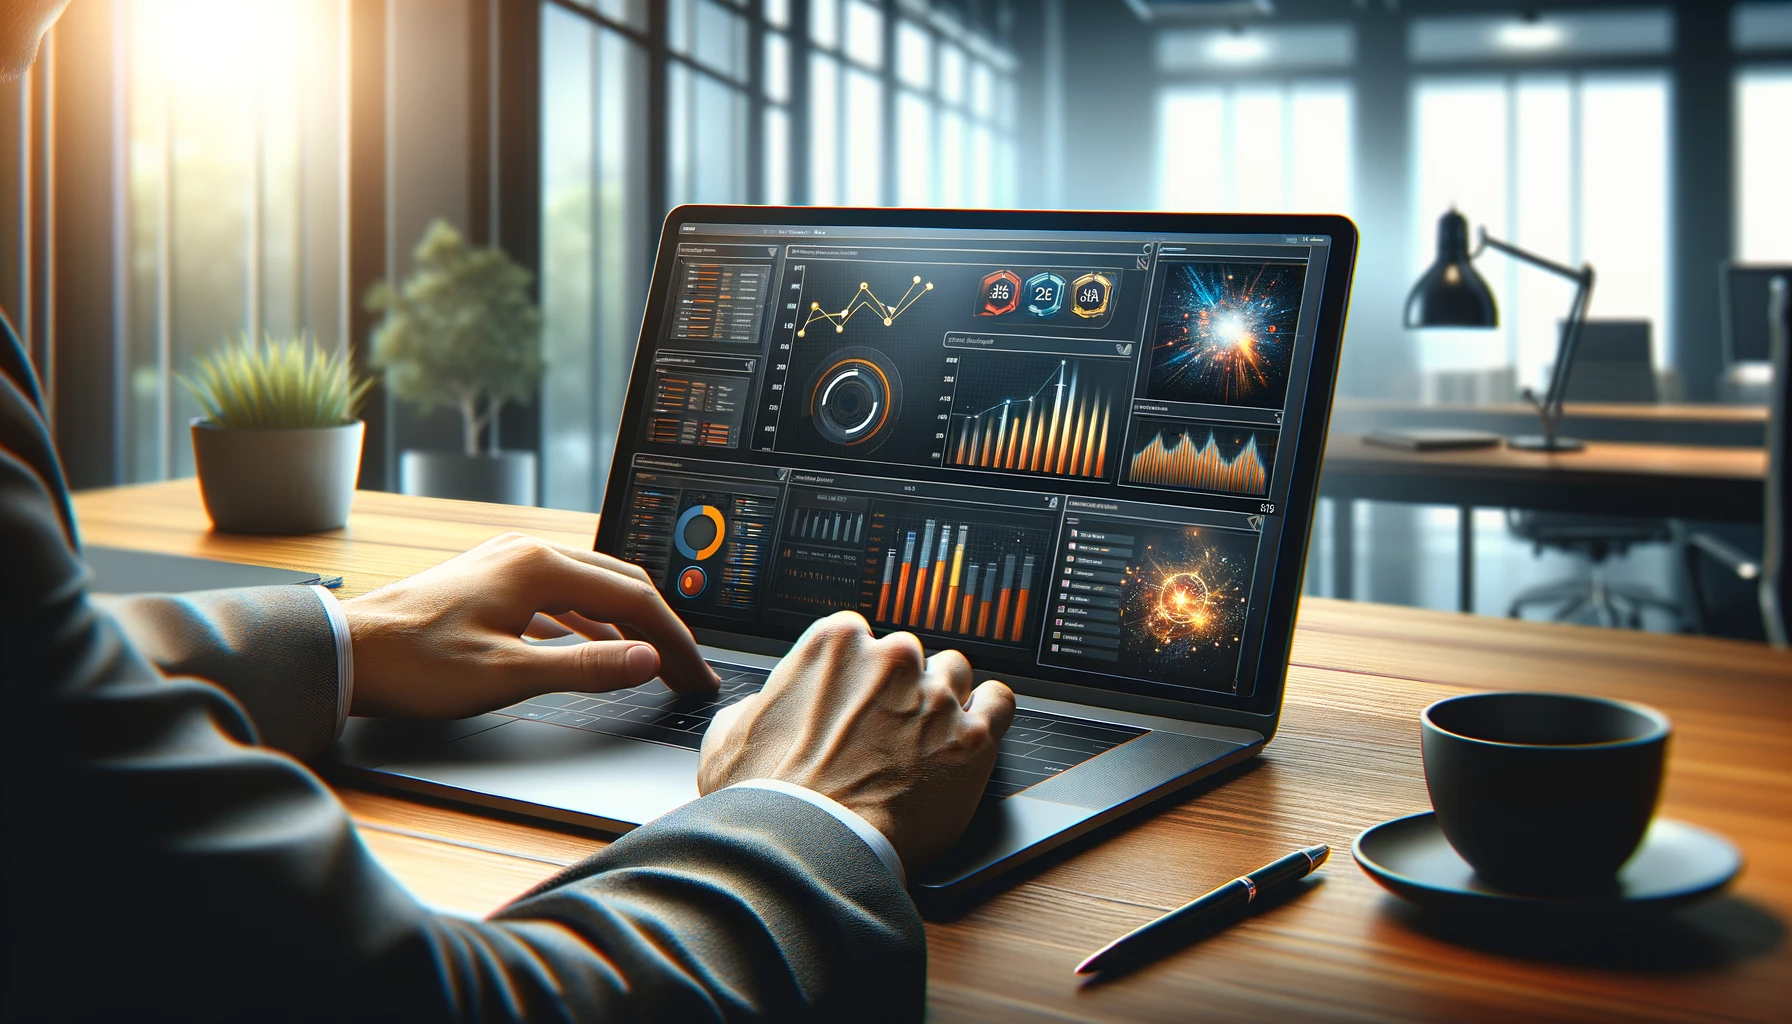 Financial advisor optimizing strategies using AI-powered analytics on a laptop.